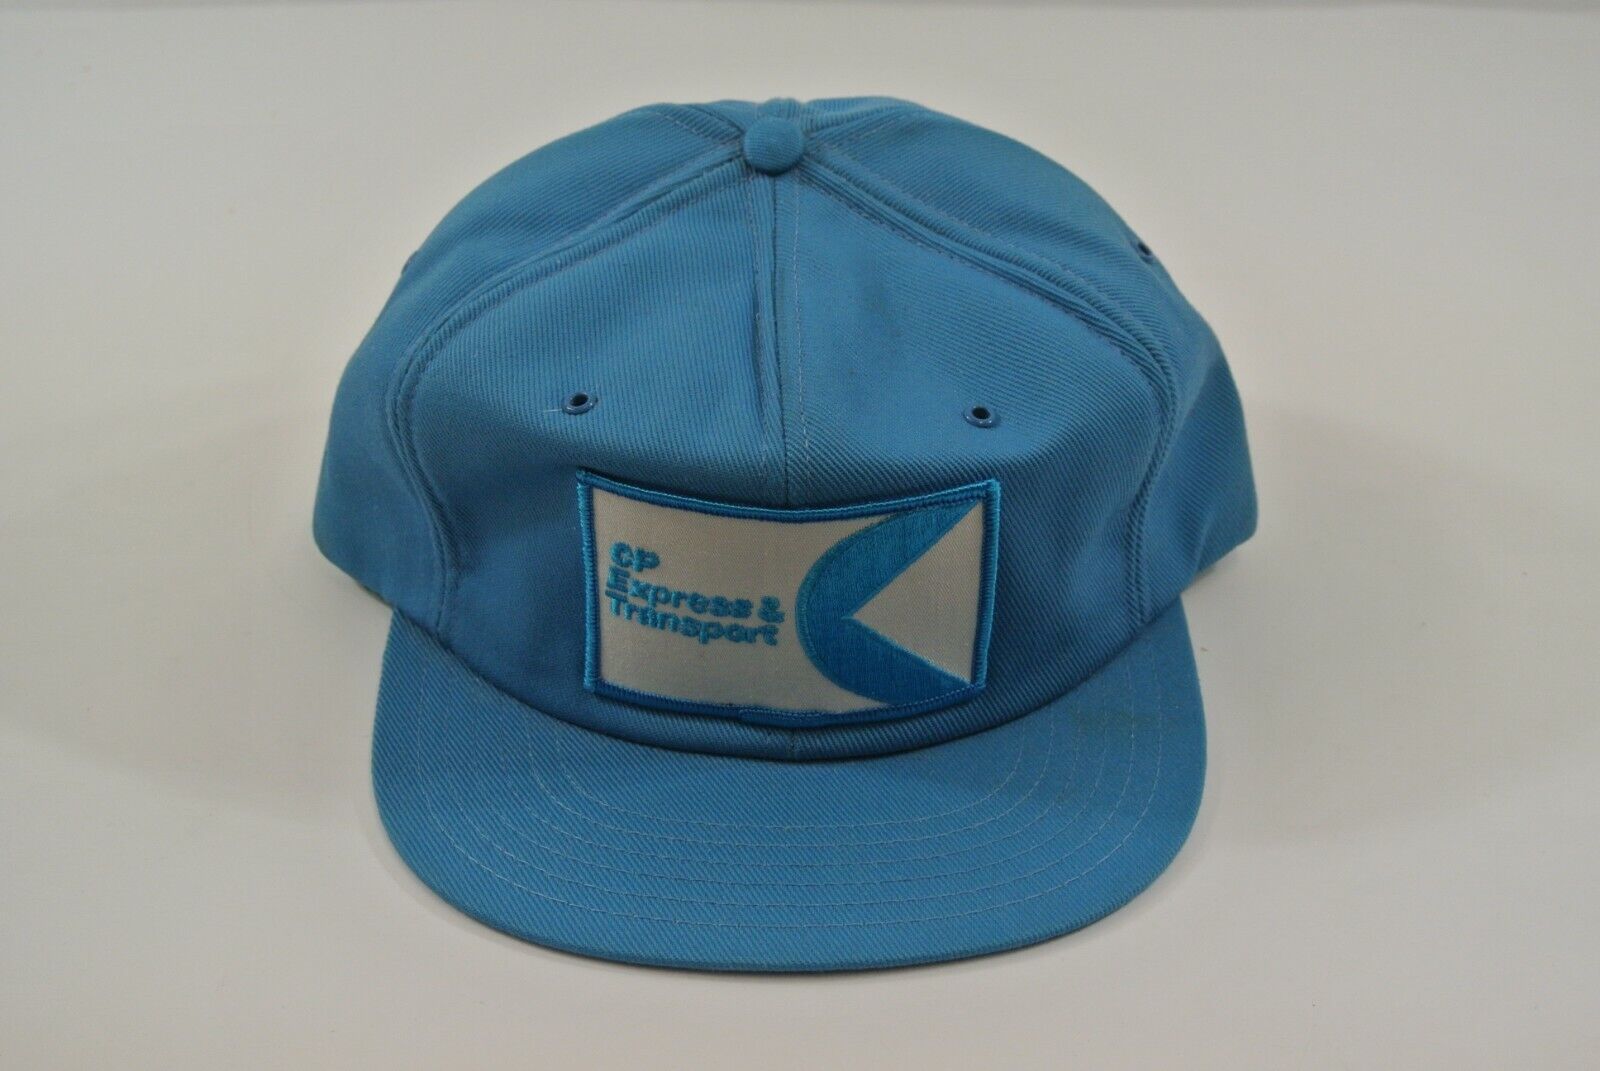 CP Express & Transport Hat Snapback Adjustable Blue Victory Caps Vintage Canada